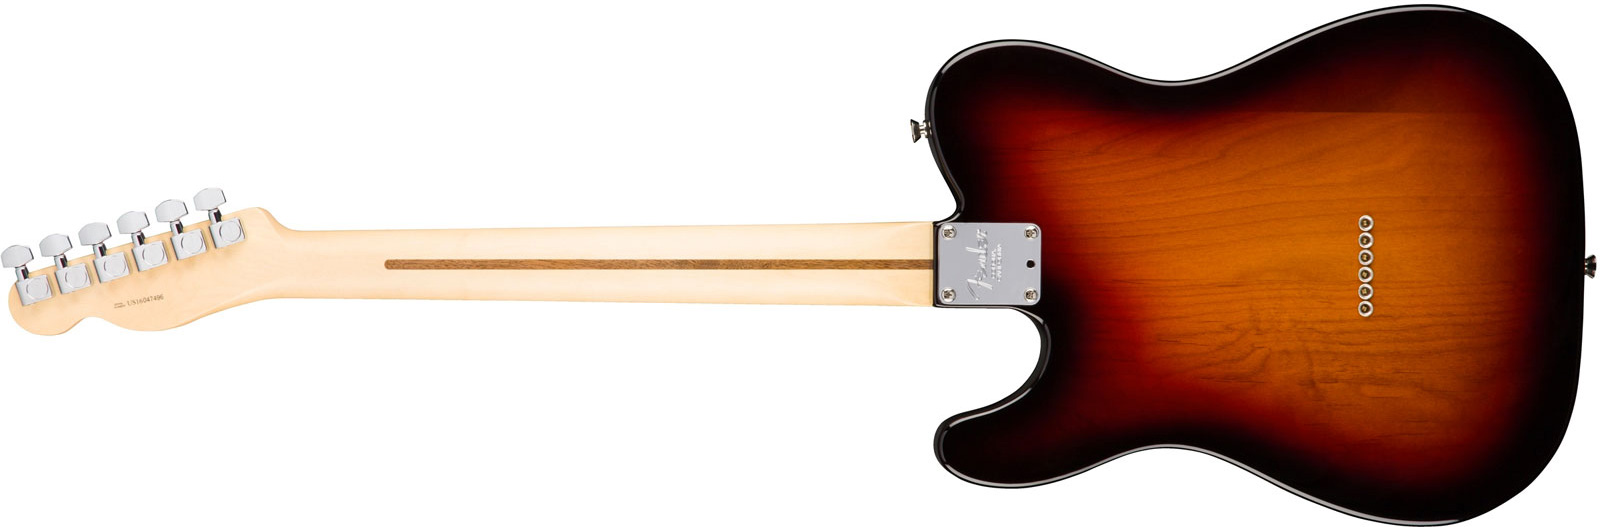 Fender Tele American Professional 2s Usa Rw - 3-color Sunburst - Str shape electric guitar - Variation 1